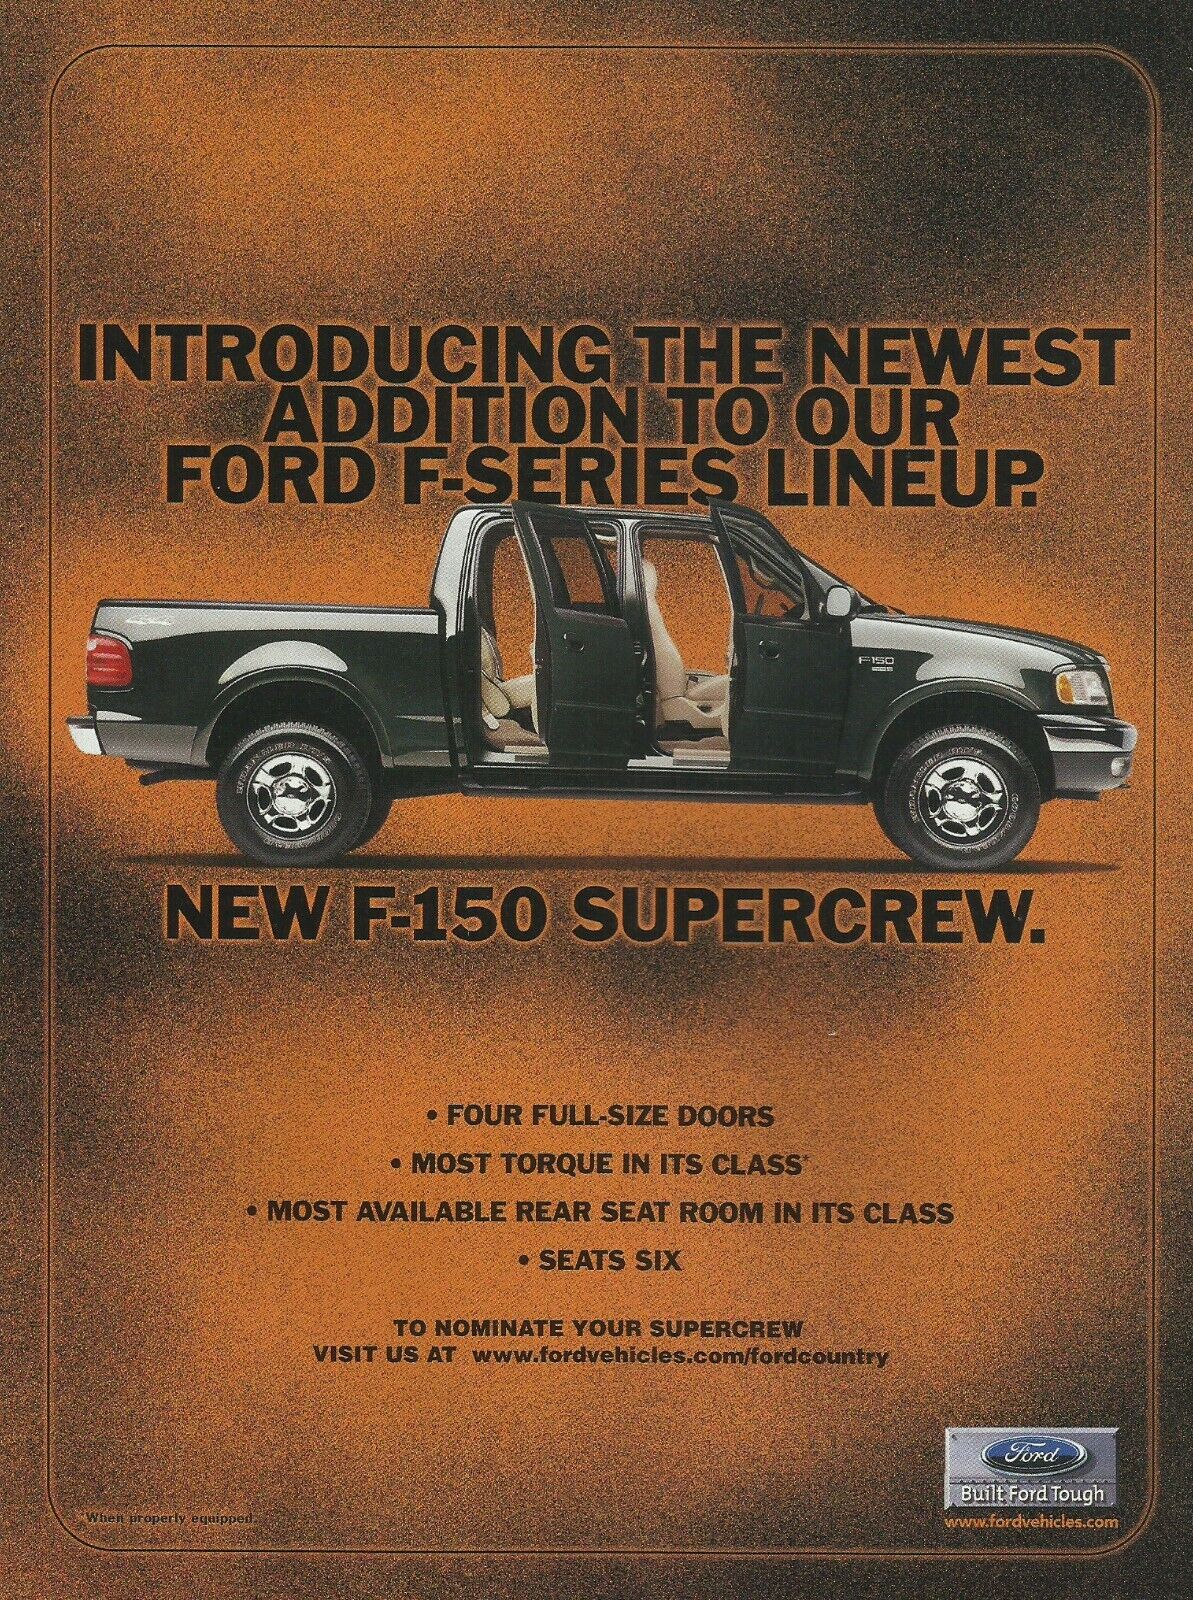 2000 Ford F-150 Supercrew F-Series Pickup Truck vintage Print Ad Advertisement